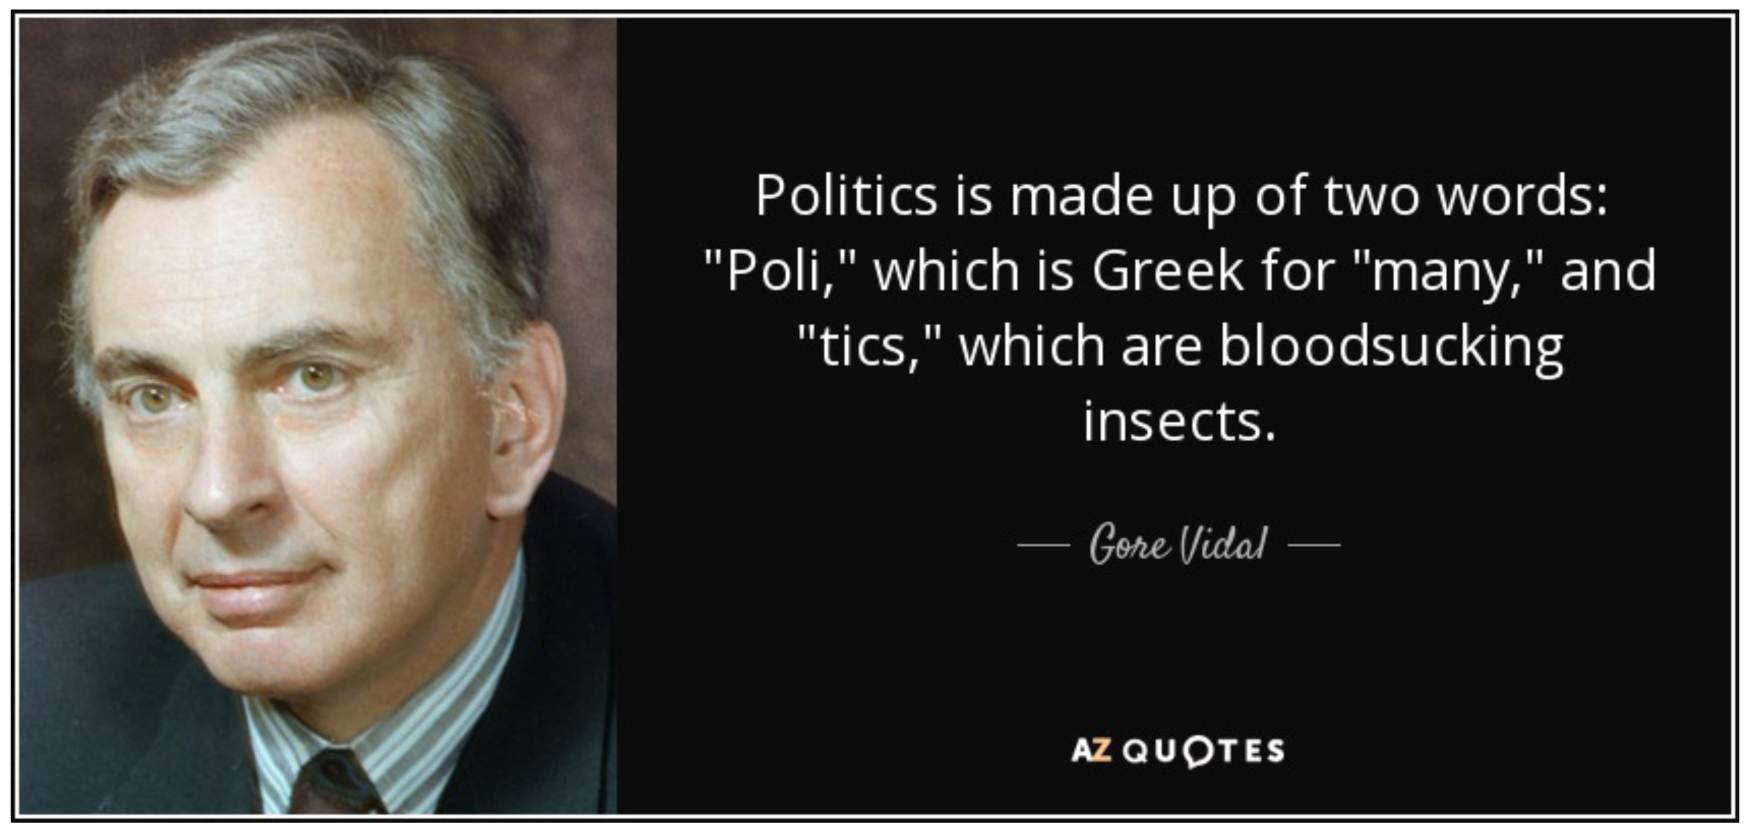 Gore Vidal Quote Image